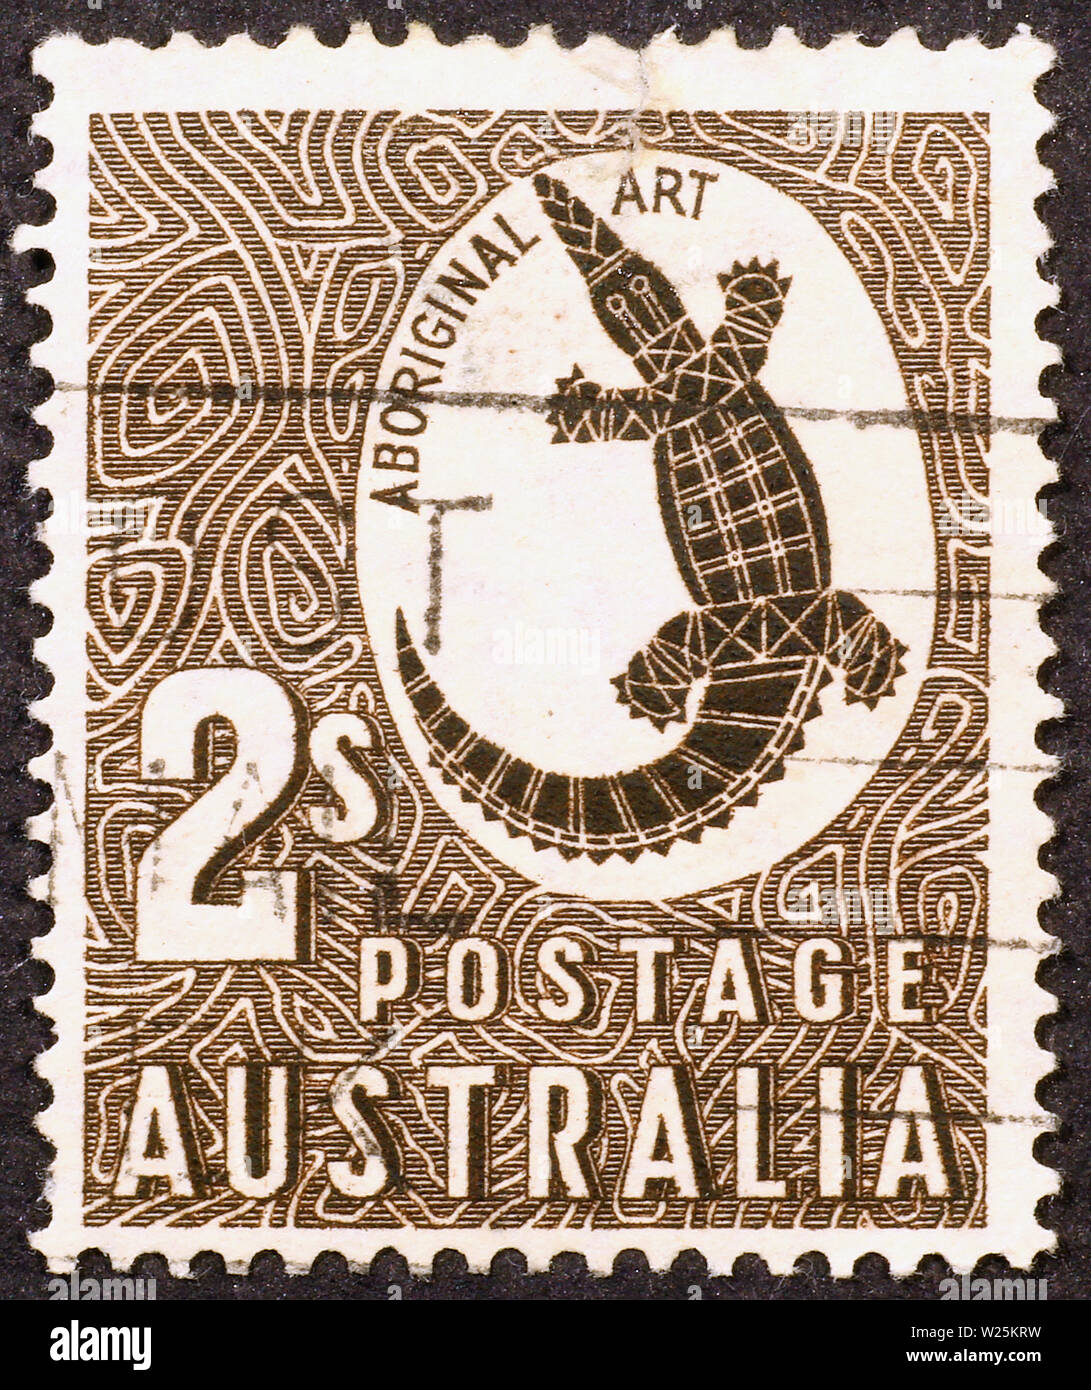 Australian postage stamp, crocodile drawn in aboriginal style Stock Photo